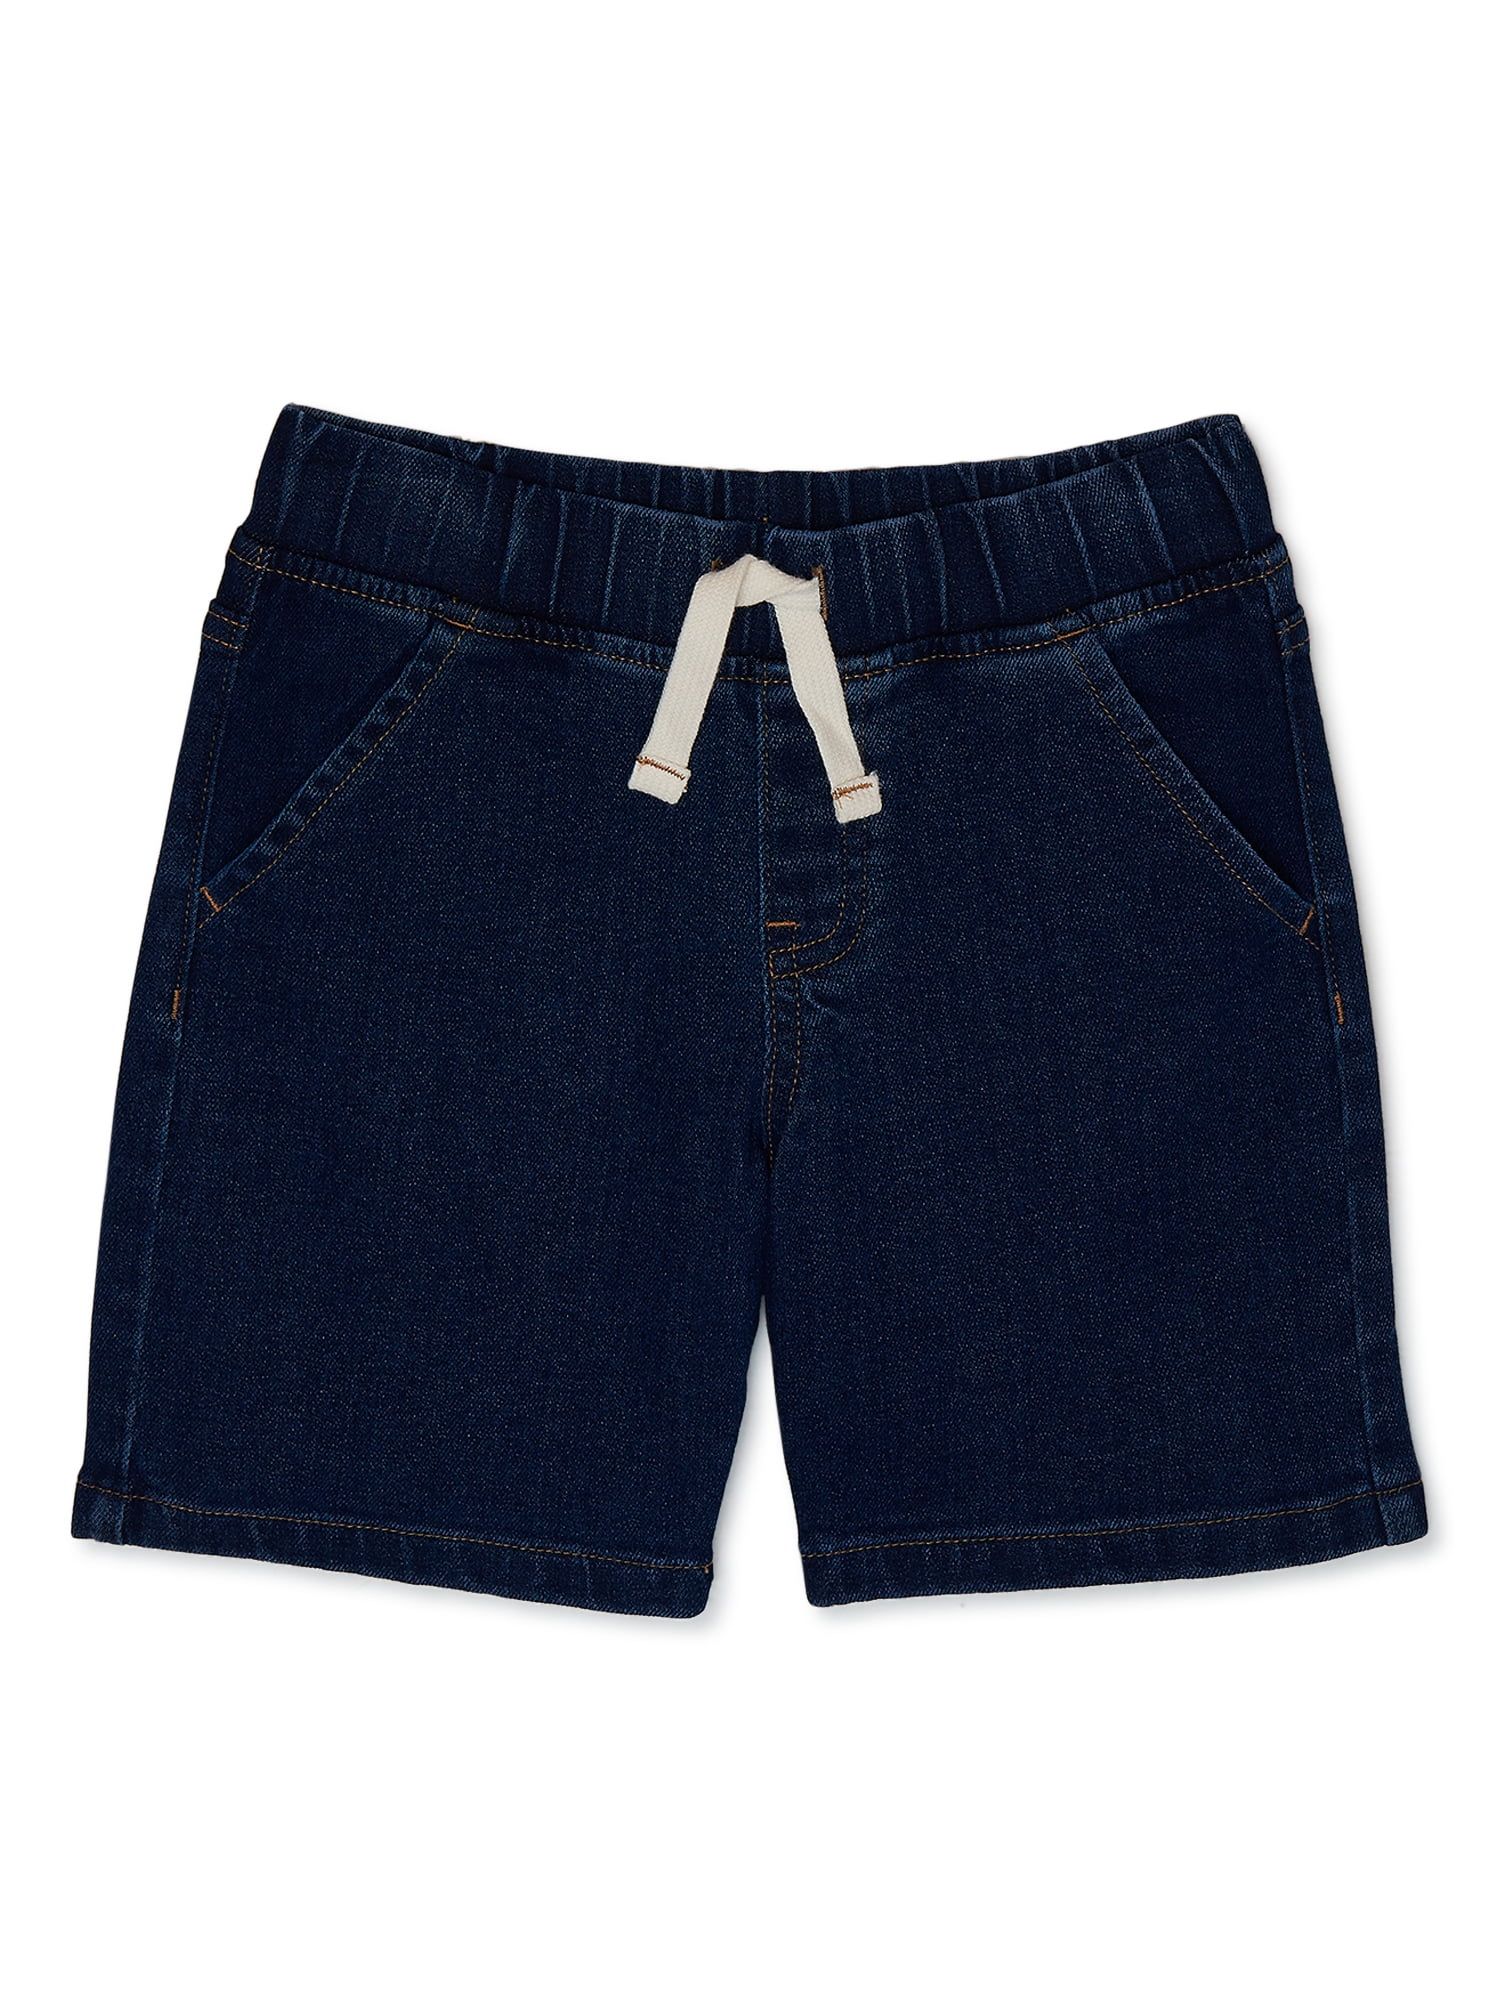 365 Kids from Garanimals Boys Mix and Match Denim Shorts, Sizes 4-10 | Walmart (US)